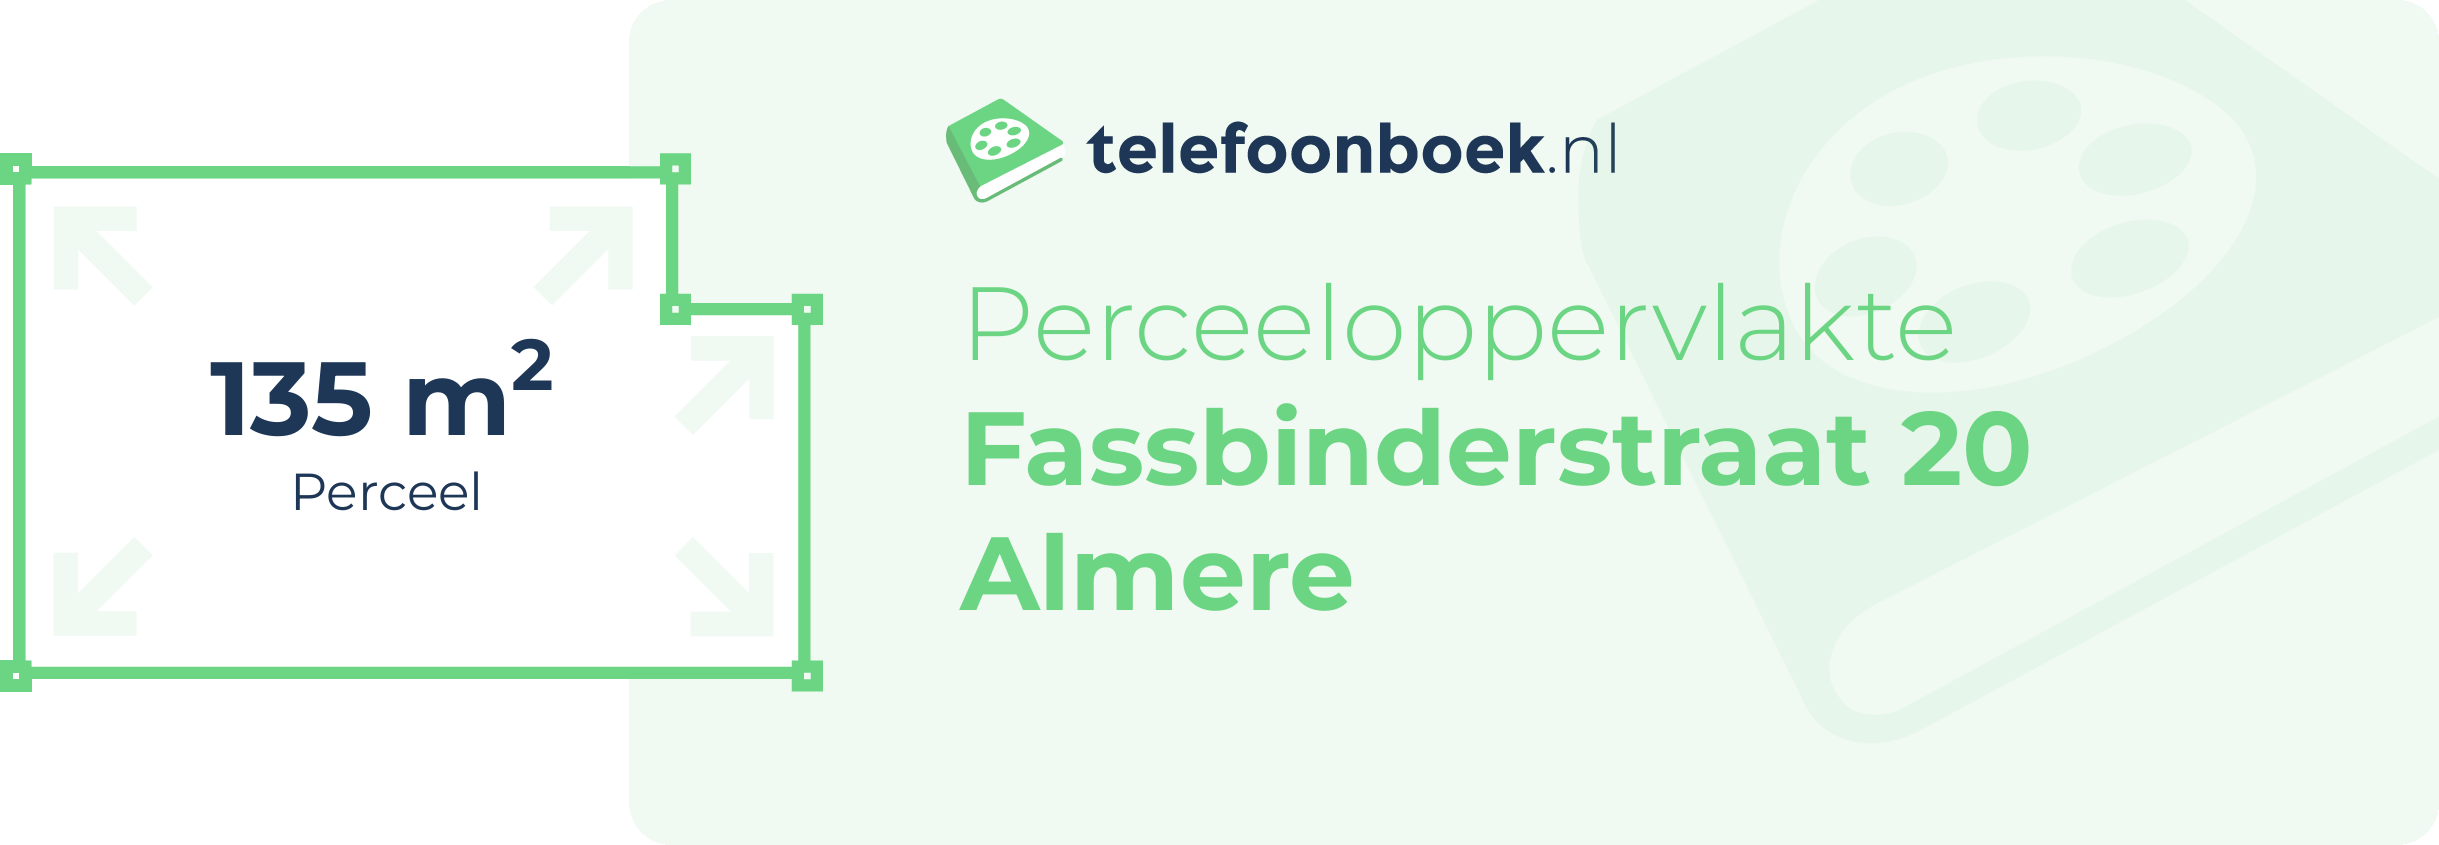 Perceeloppervlakte Fassbinderstraat 20 Almere